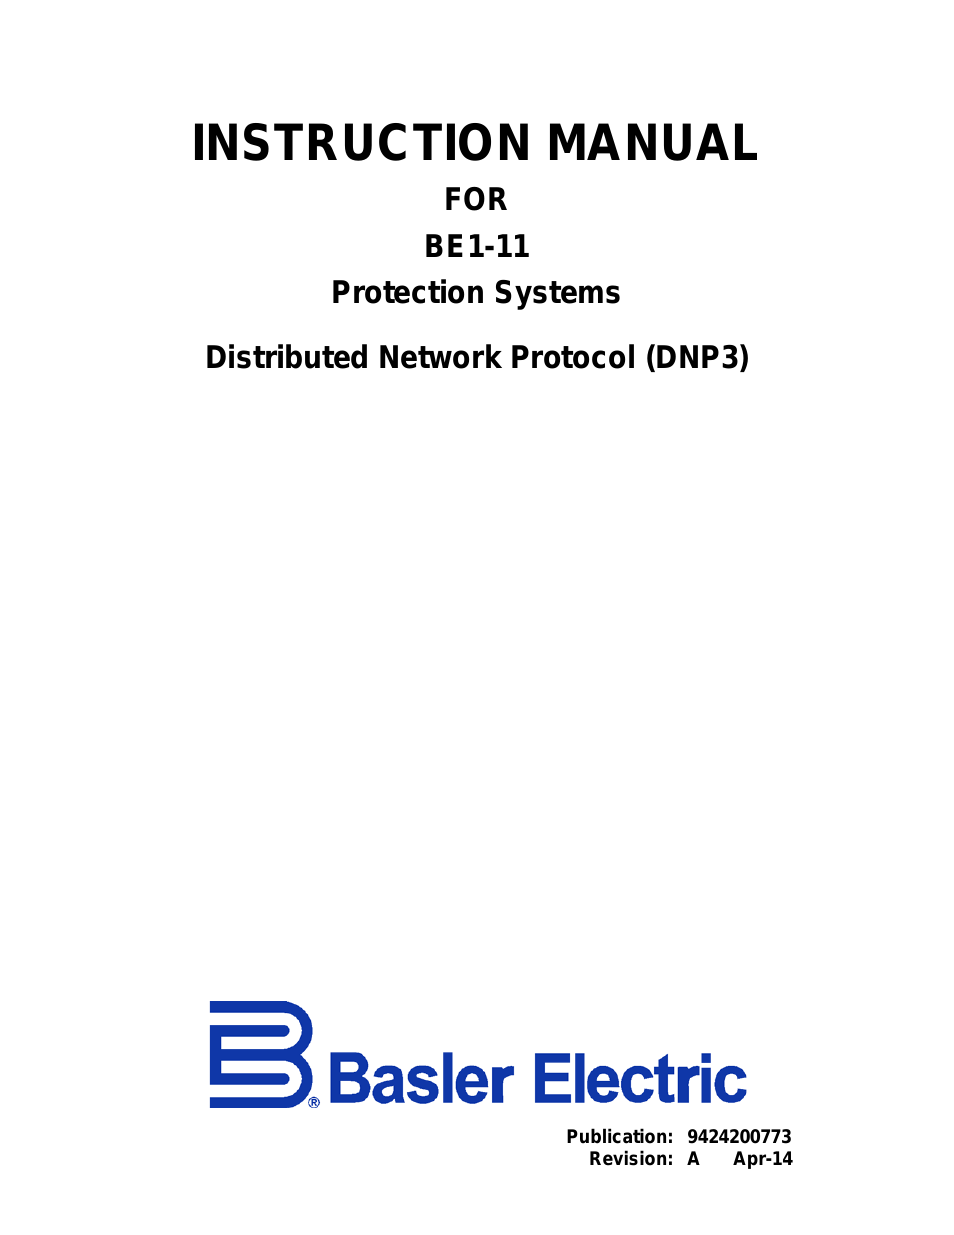 BE1-11 DNP3 Protocol